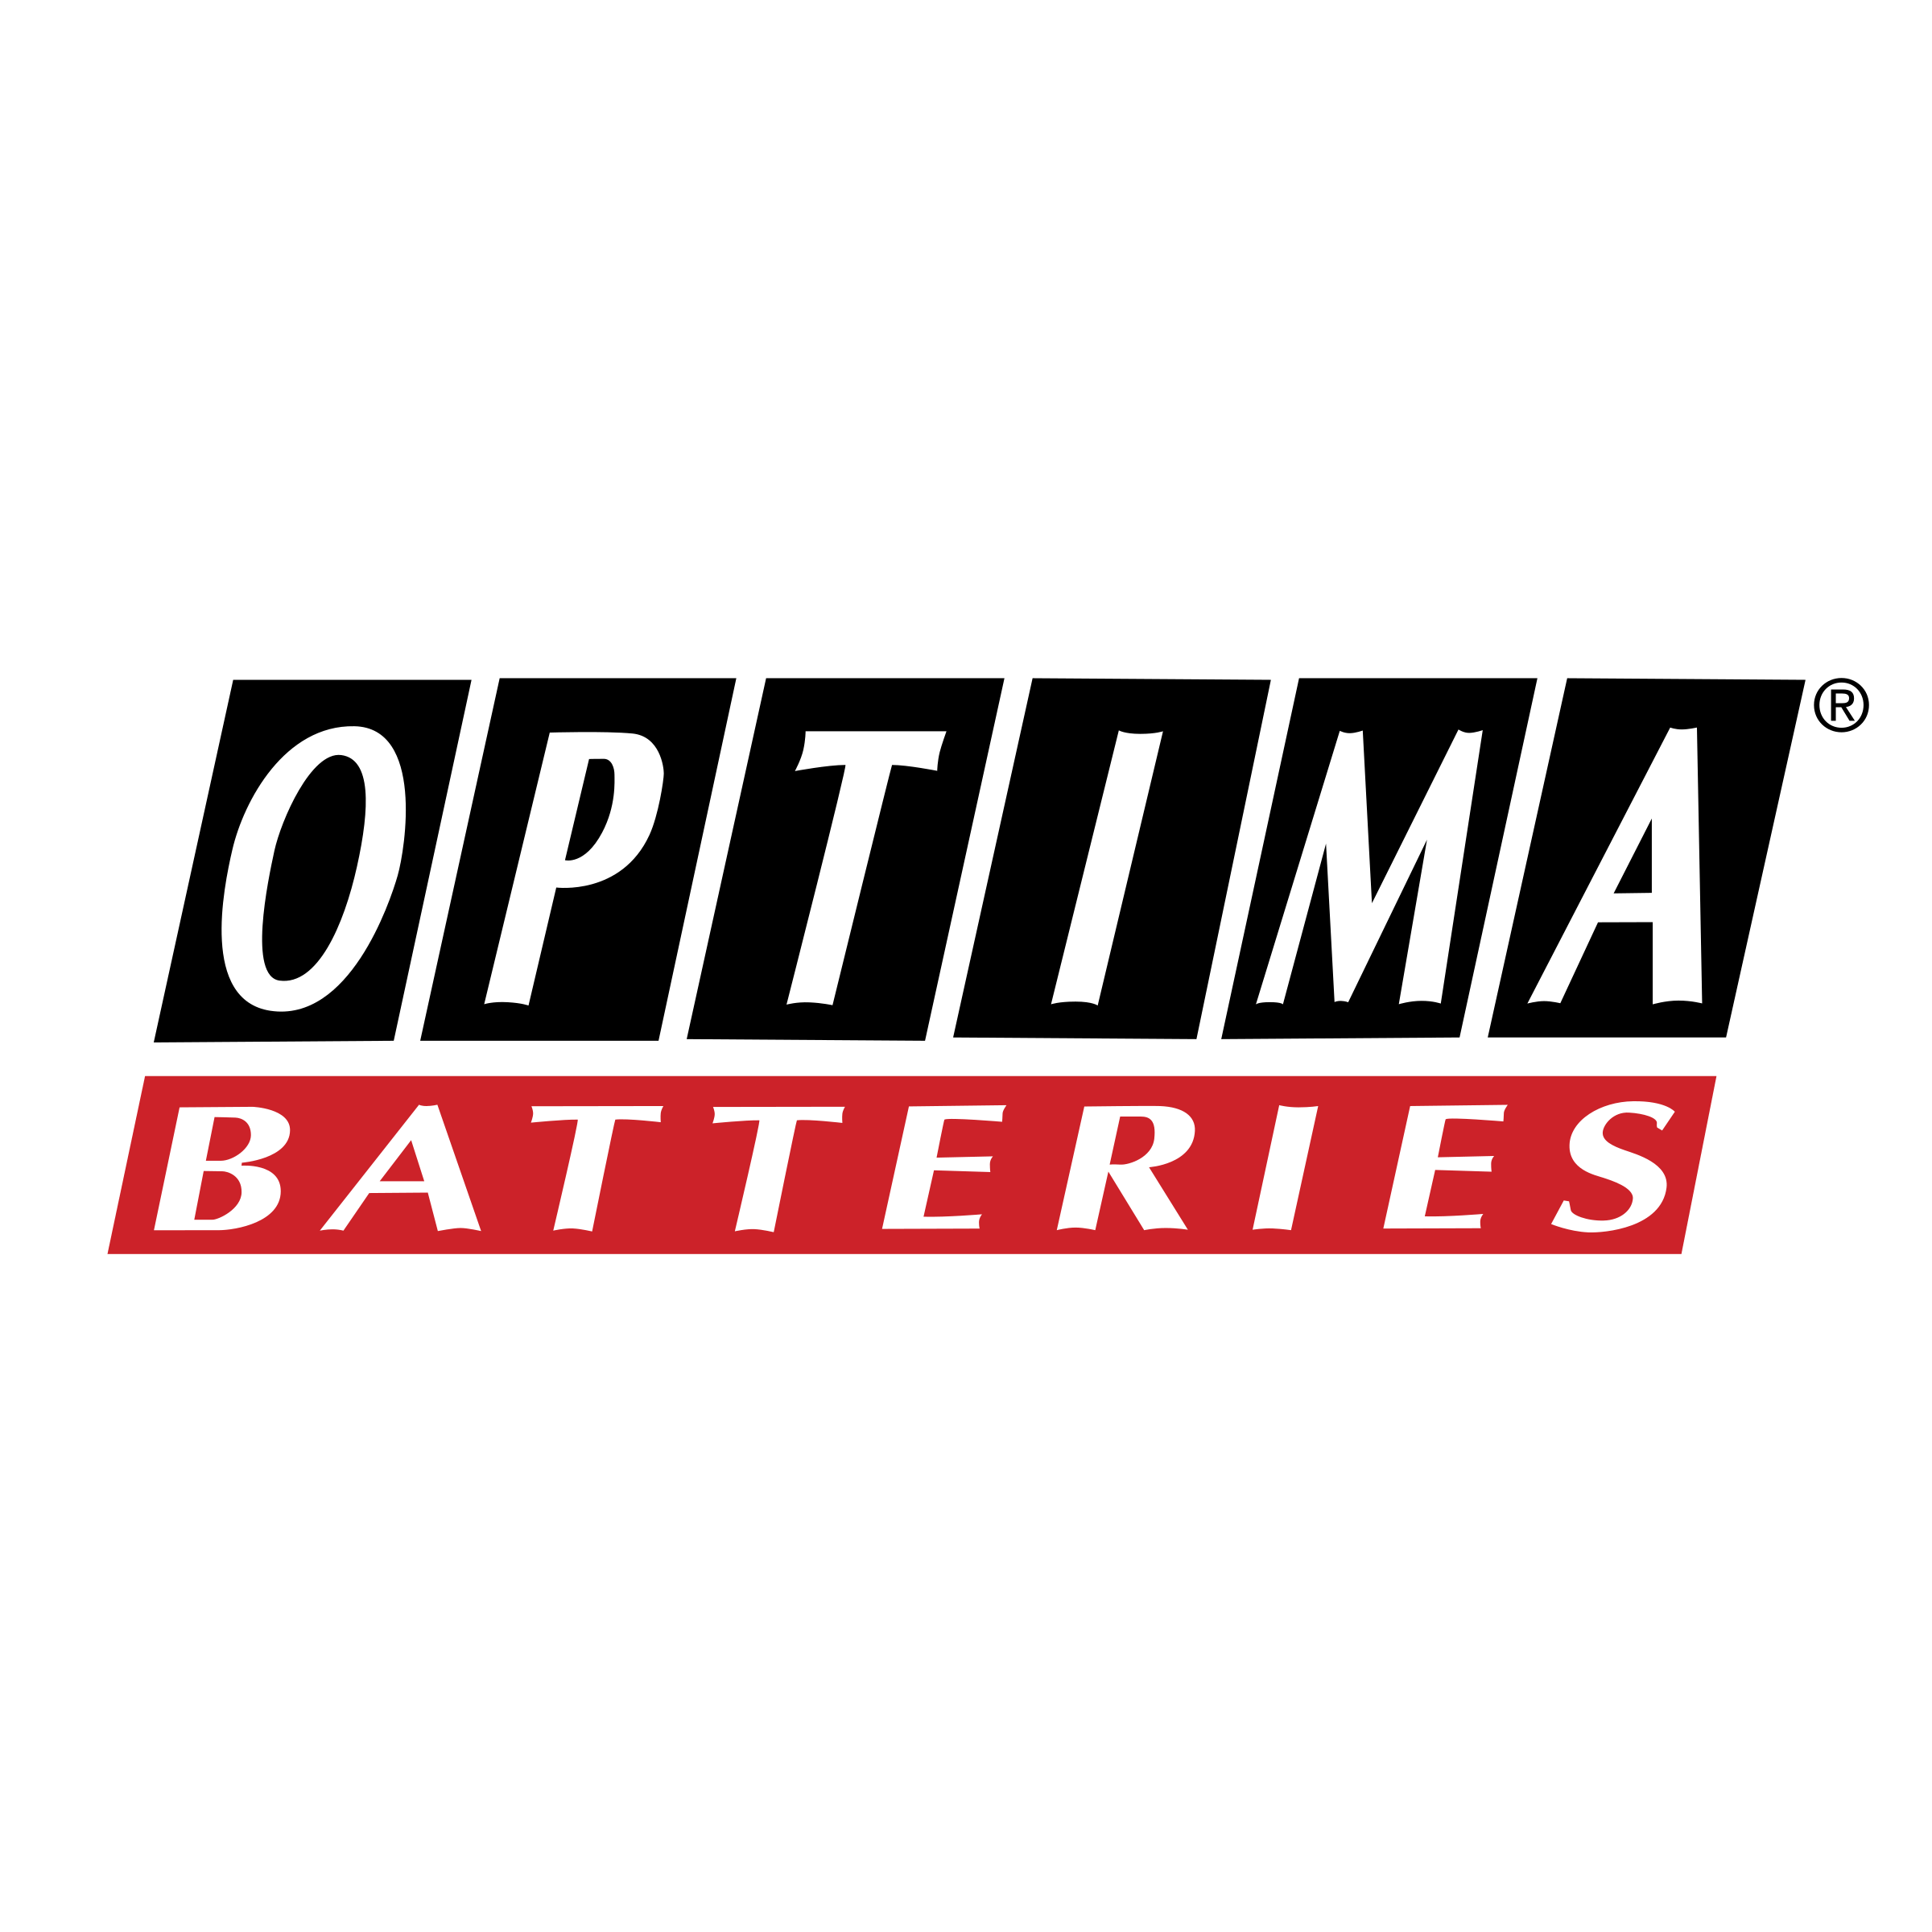 Optima Logo - Optima Batteries Logo PNG Transparent & SVG Vector - Freebie Supply